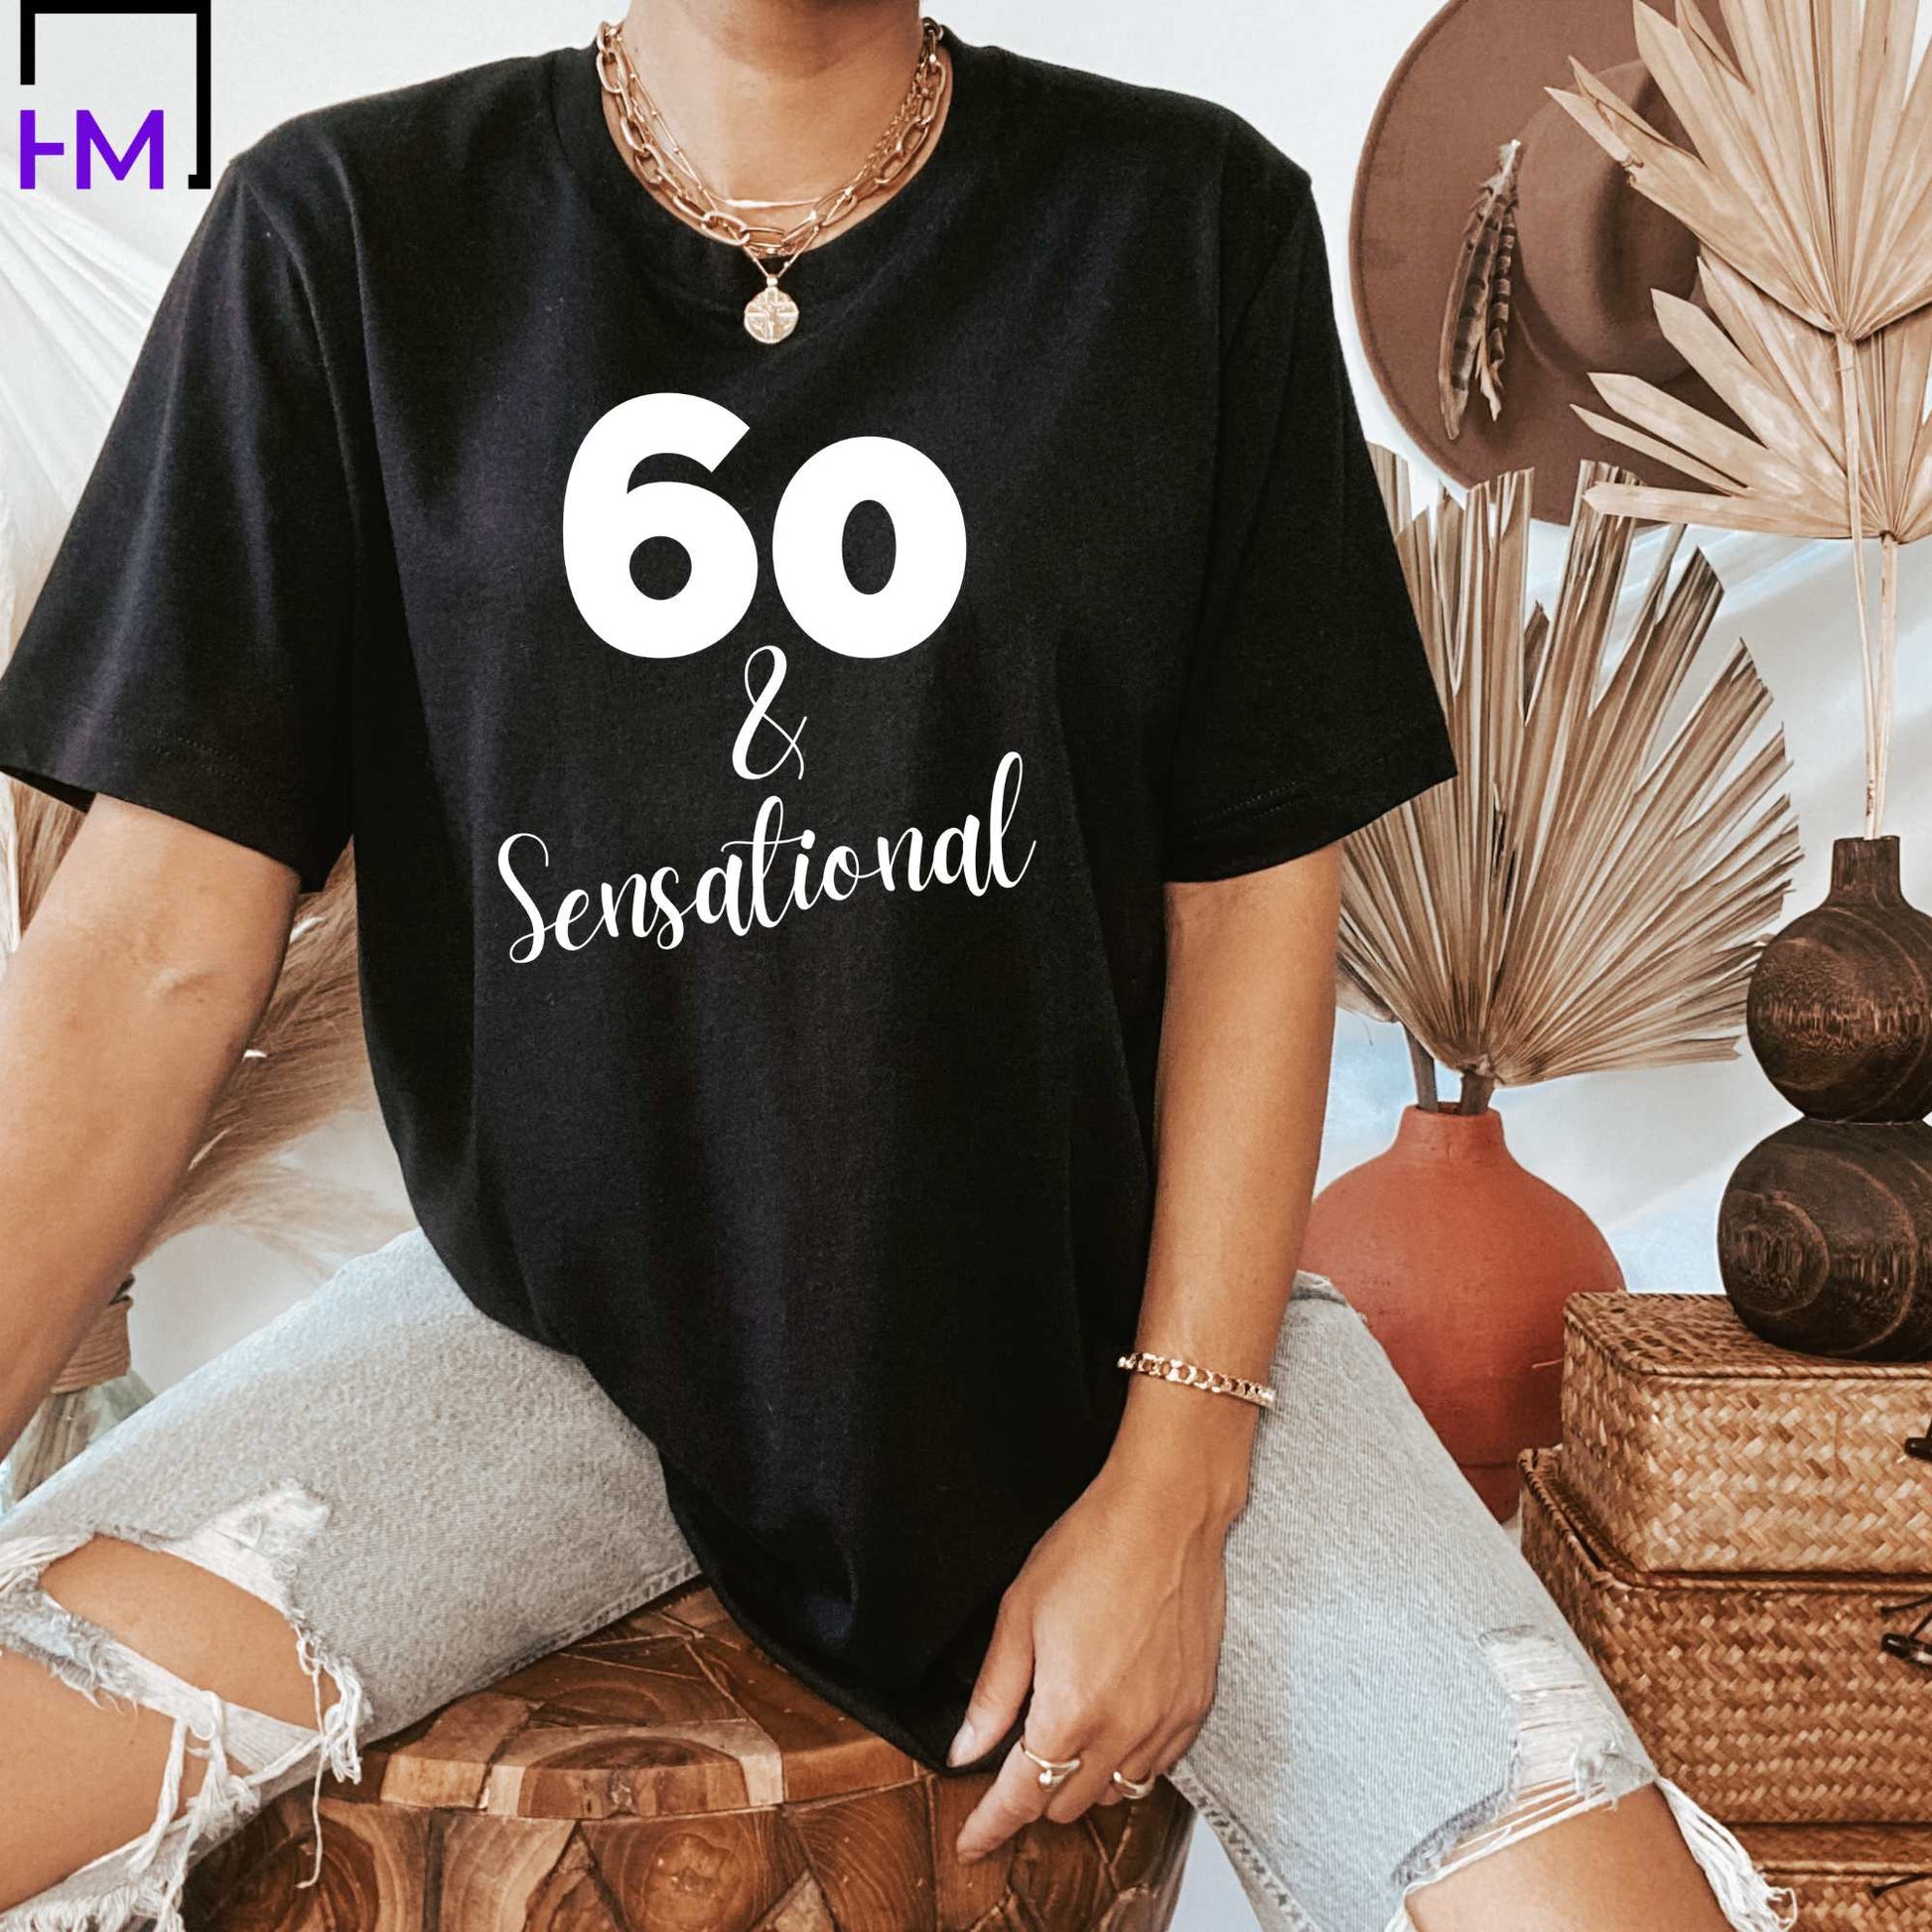 60 & Sensational, 60th Birthday Shirt for Women